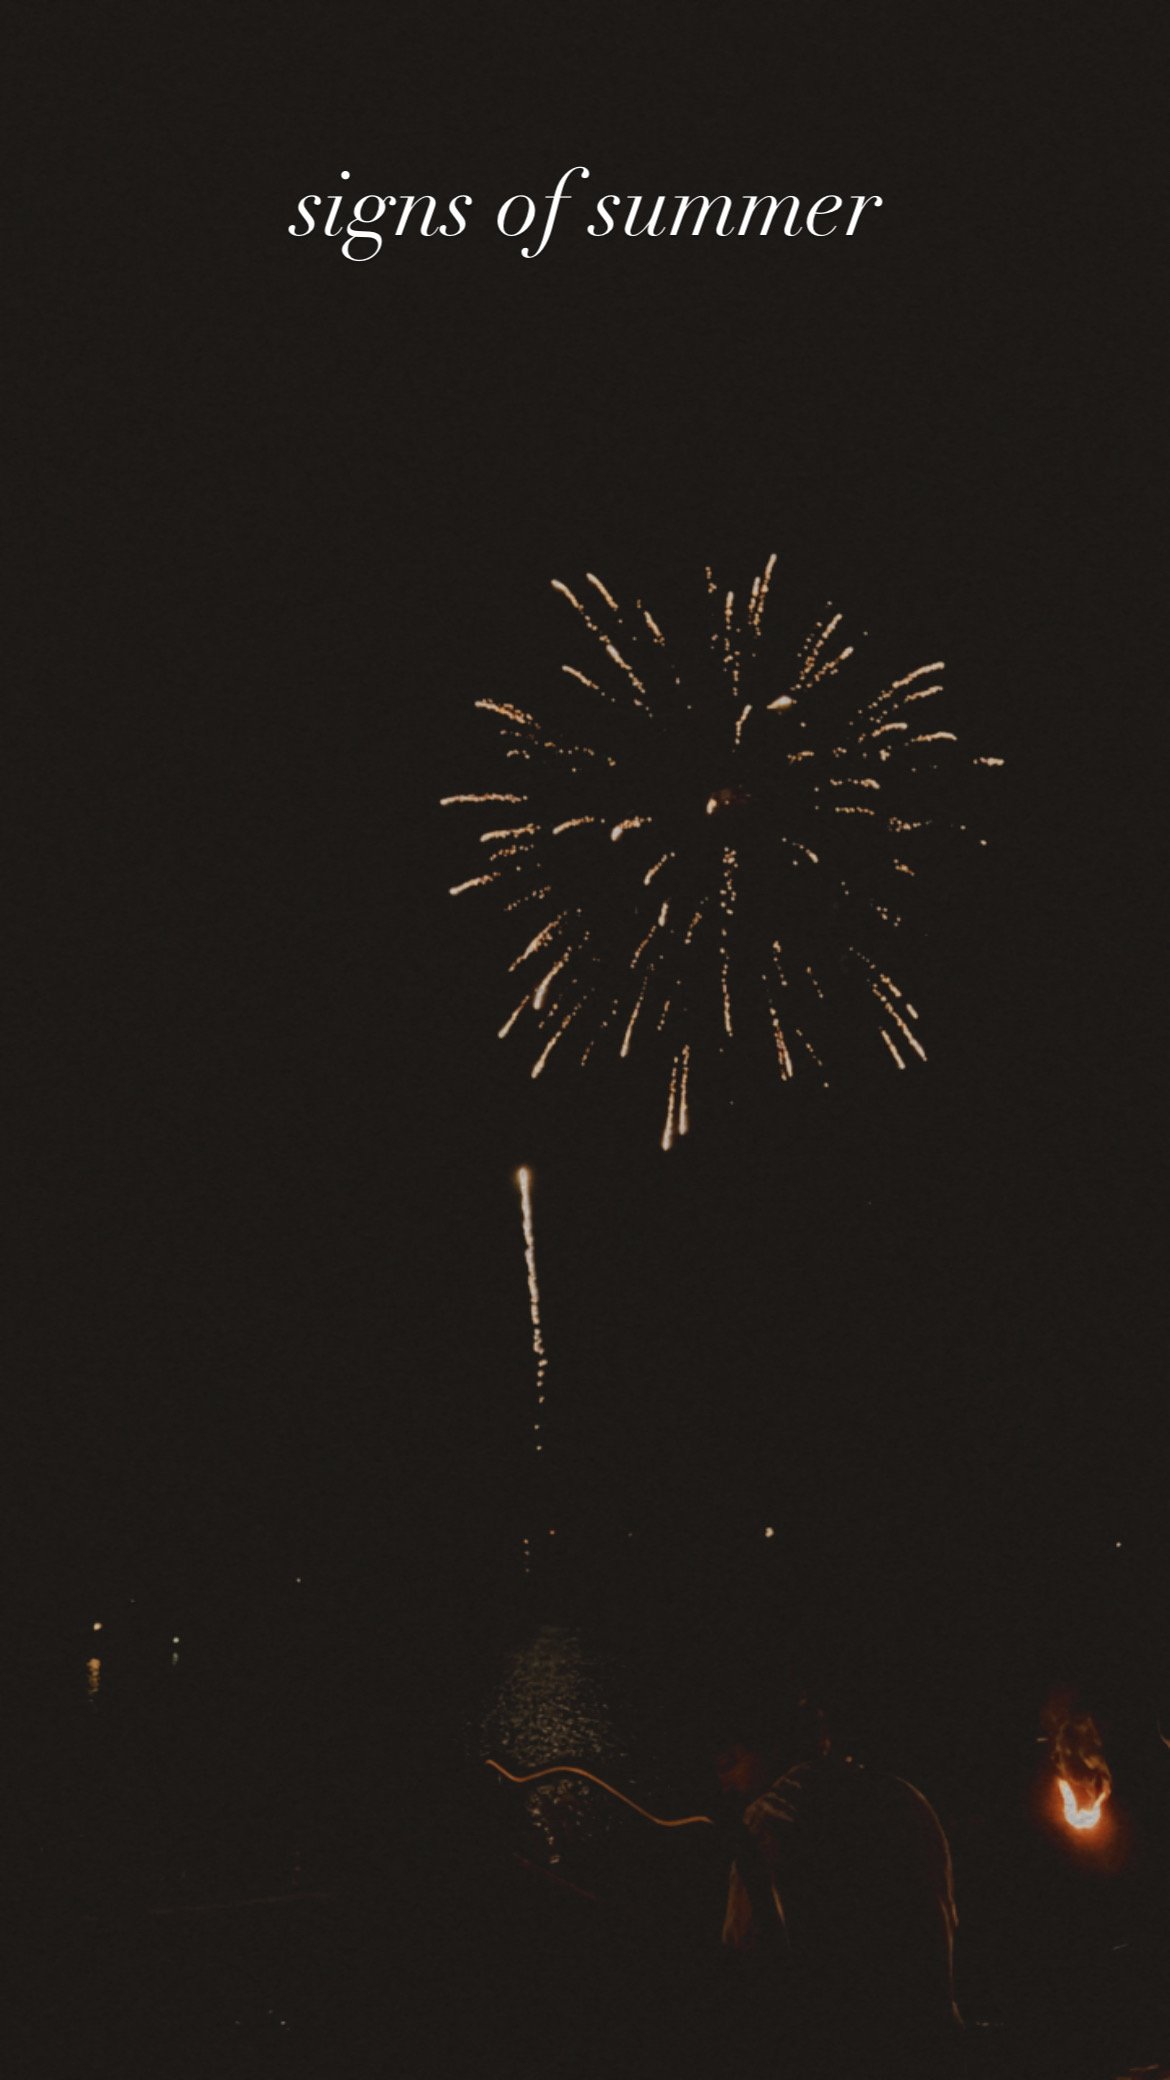 Fireworks.JPG